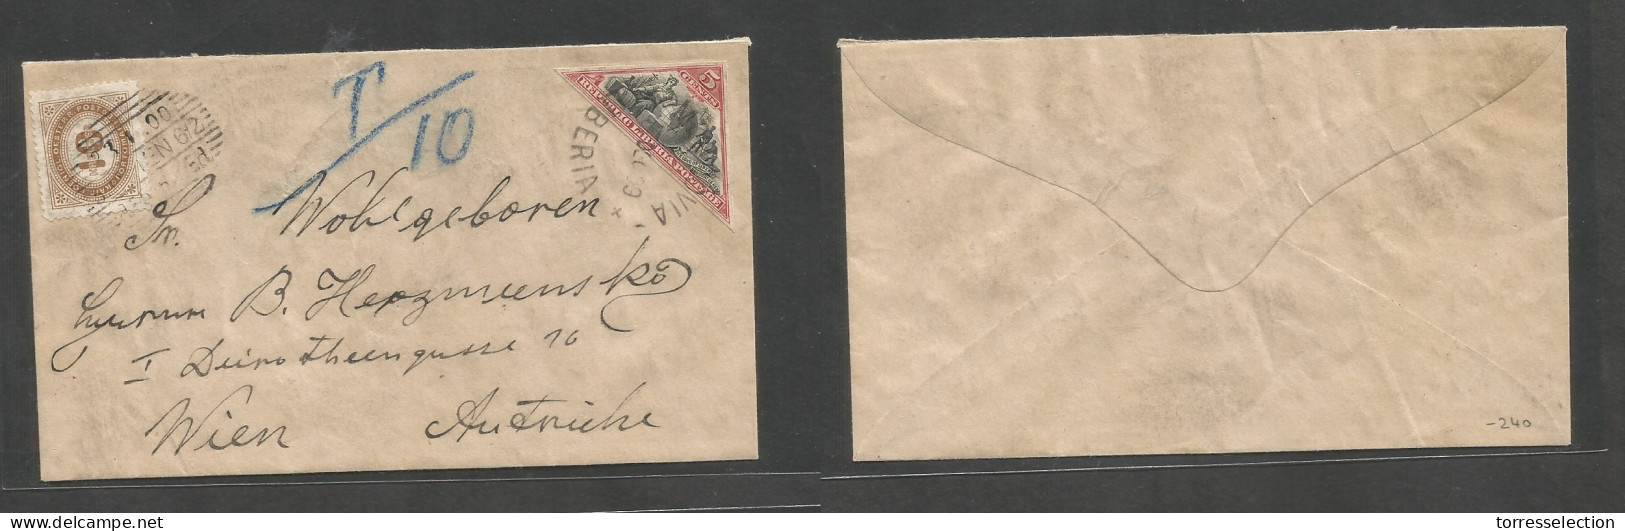 LIBERIA. 1899 (Dec 19) Monrovia - Austria, Wien, Where Taxed (23 Jan 00) Fkd 5c Red Imperf Fkd Envelope, Tied Cds + T/10 - Liberia